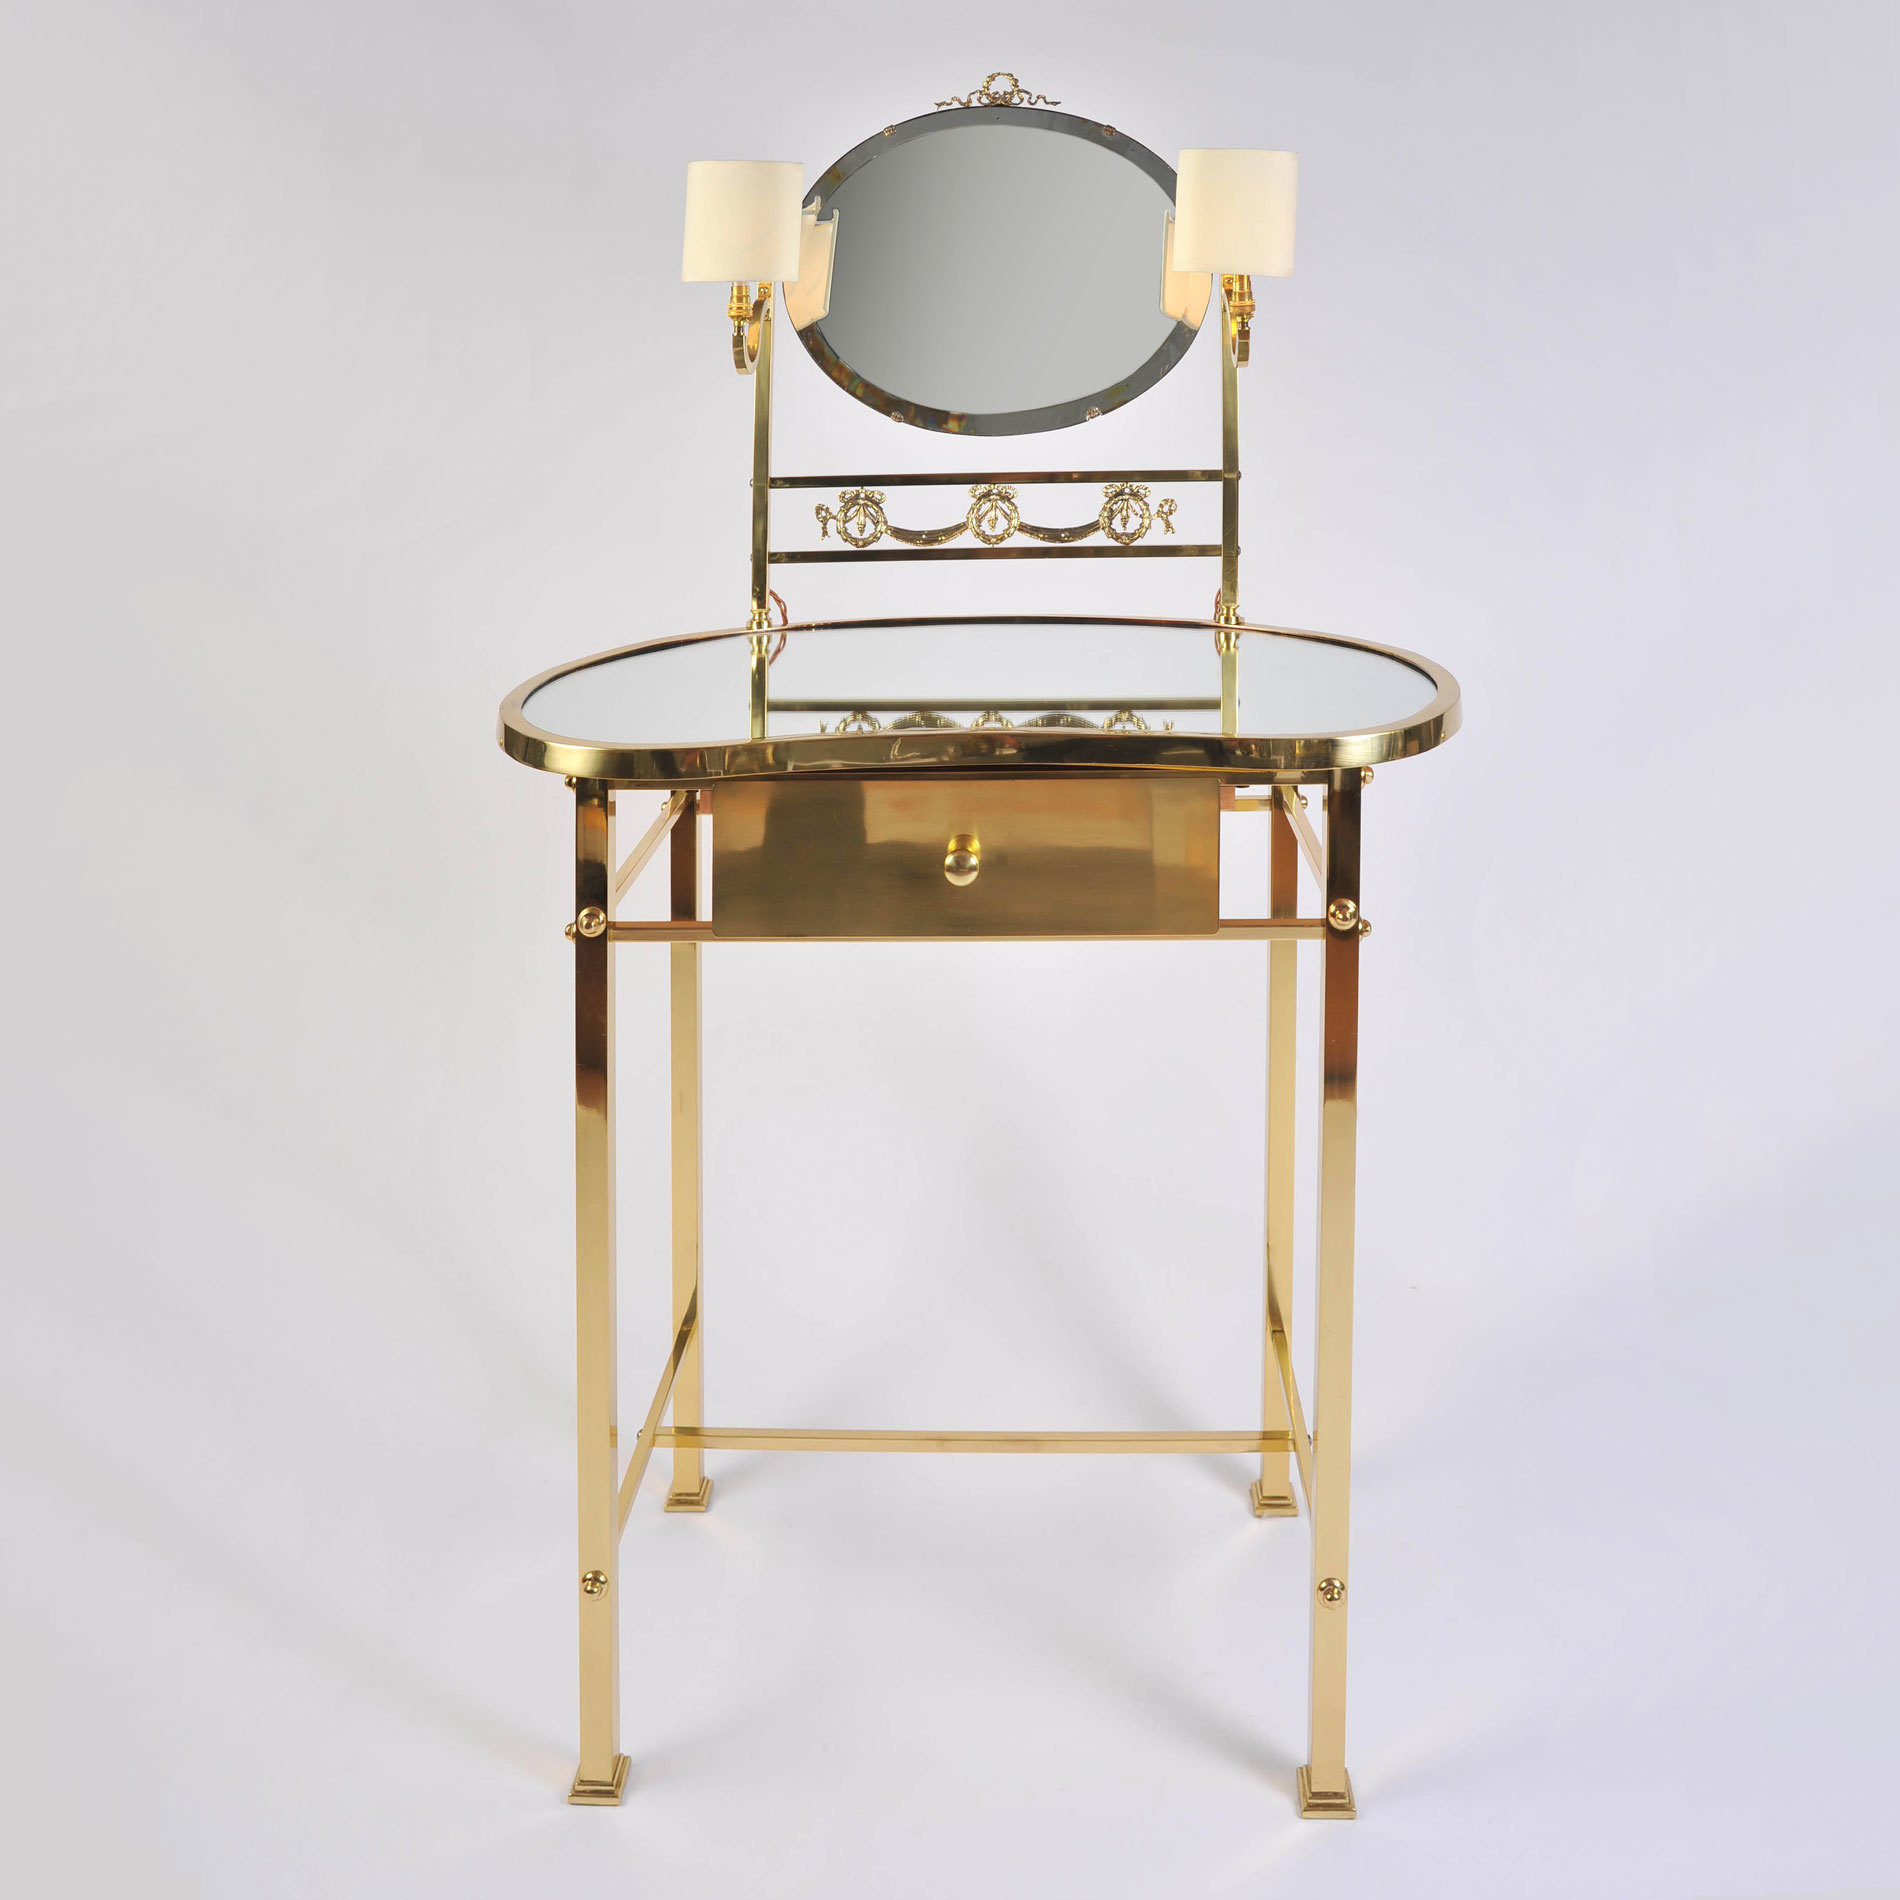 https://www.valeriewade.com/uploads/Brass-Dressing-Table-mirror-lights-01.jpg